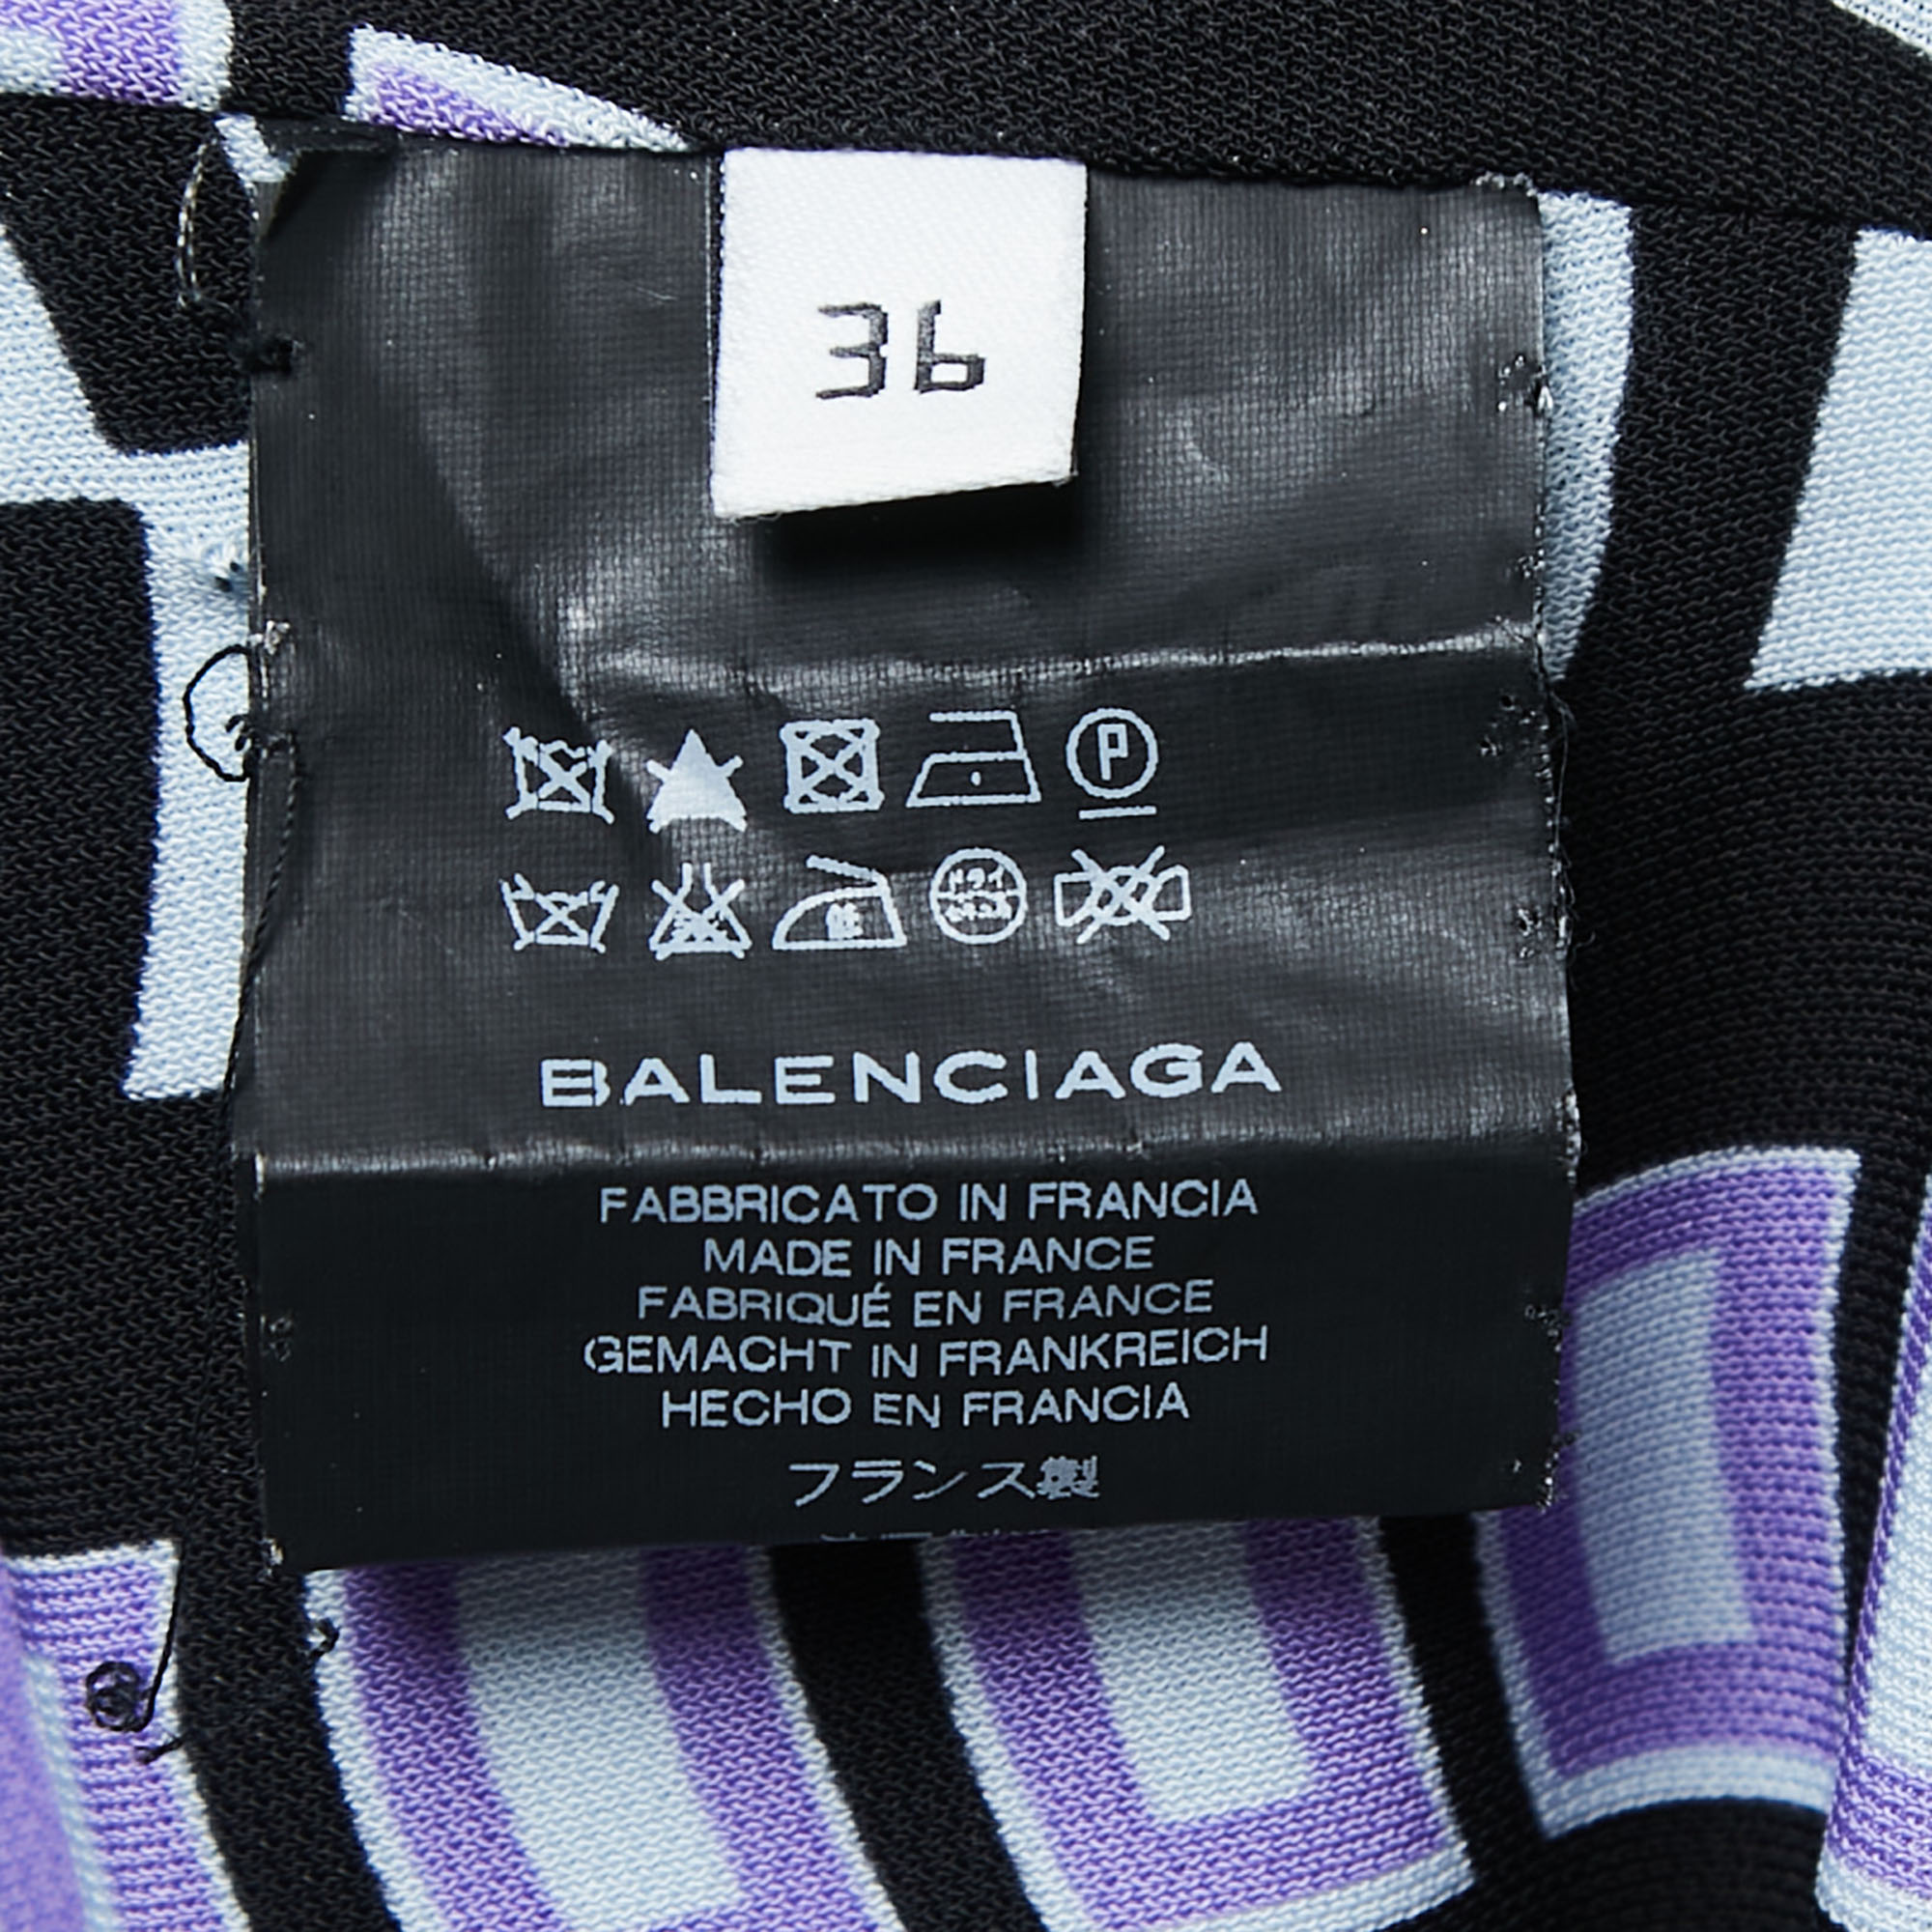 Balenciaga Black/Purple Patterned Jersey Strappy Draped Maxi Dress S